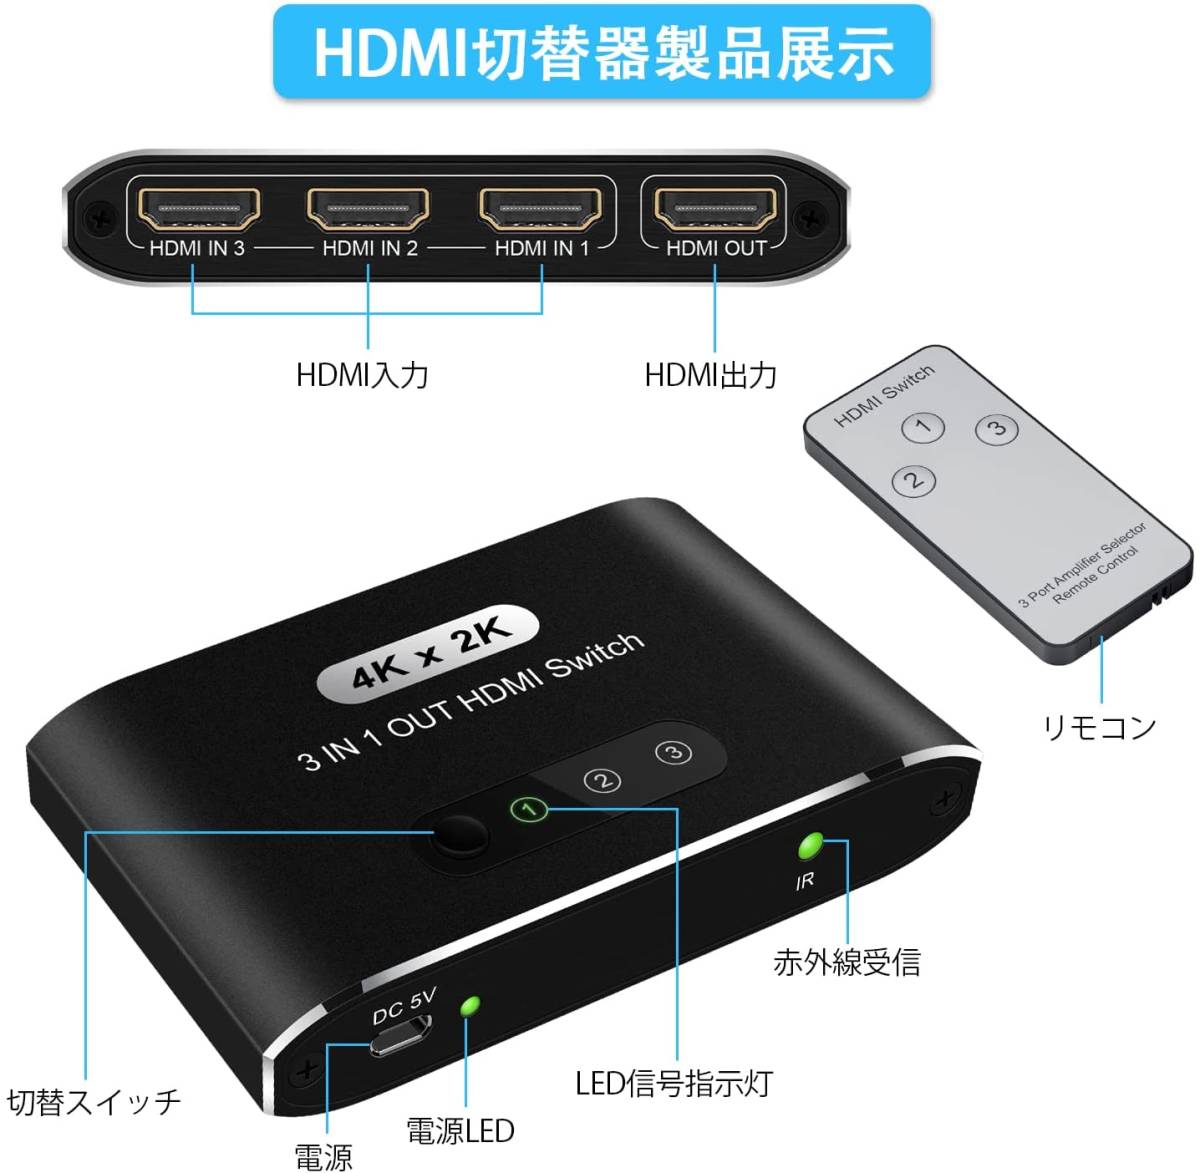 DMI 切替器 3入力1出力 HDMI セレクター HDMI 分配器 自動/手動切り替え リモコン長距離操作 4K/1080p/3D視覚効果 金メッキポート搭載